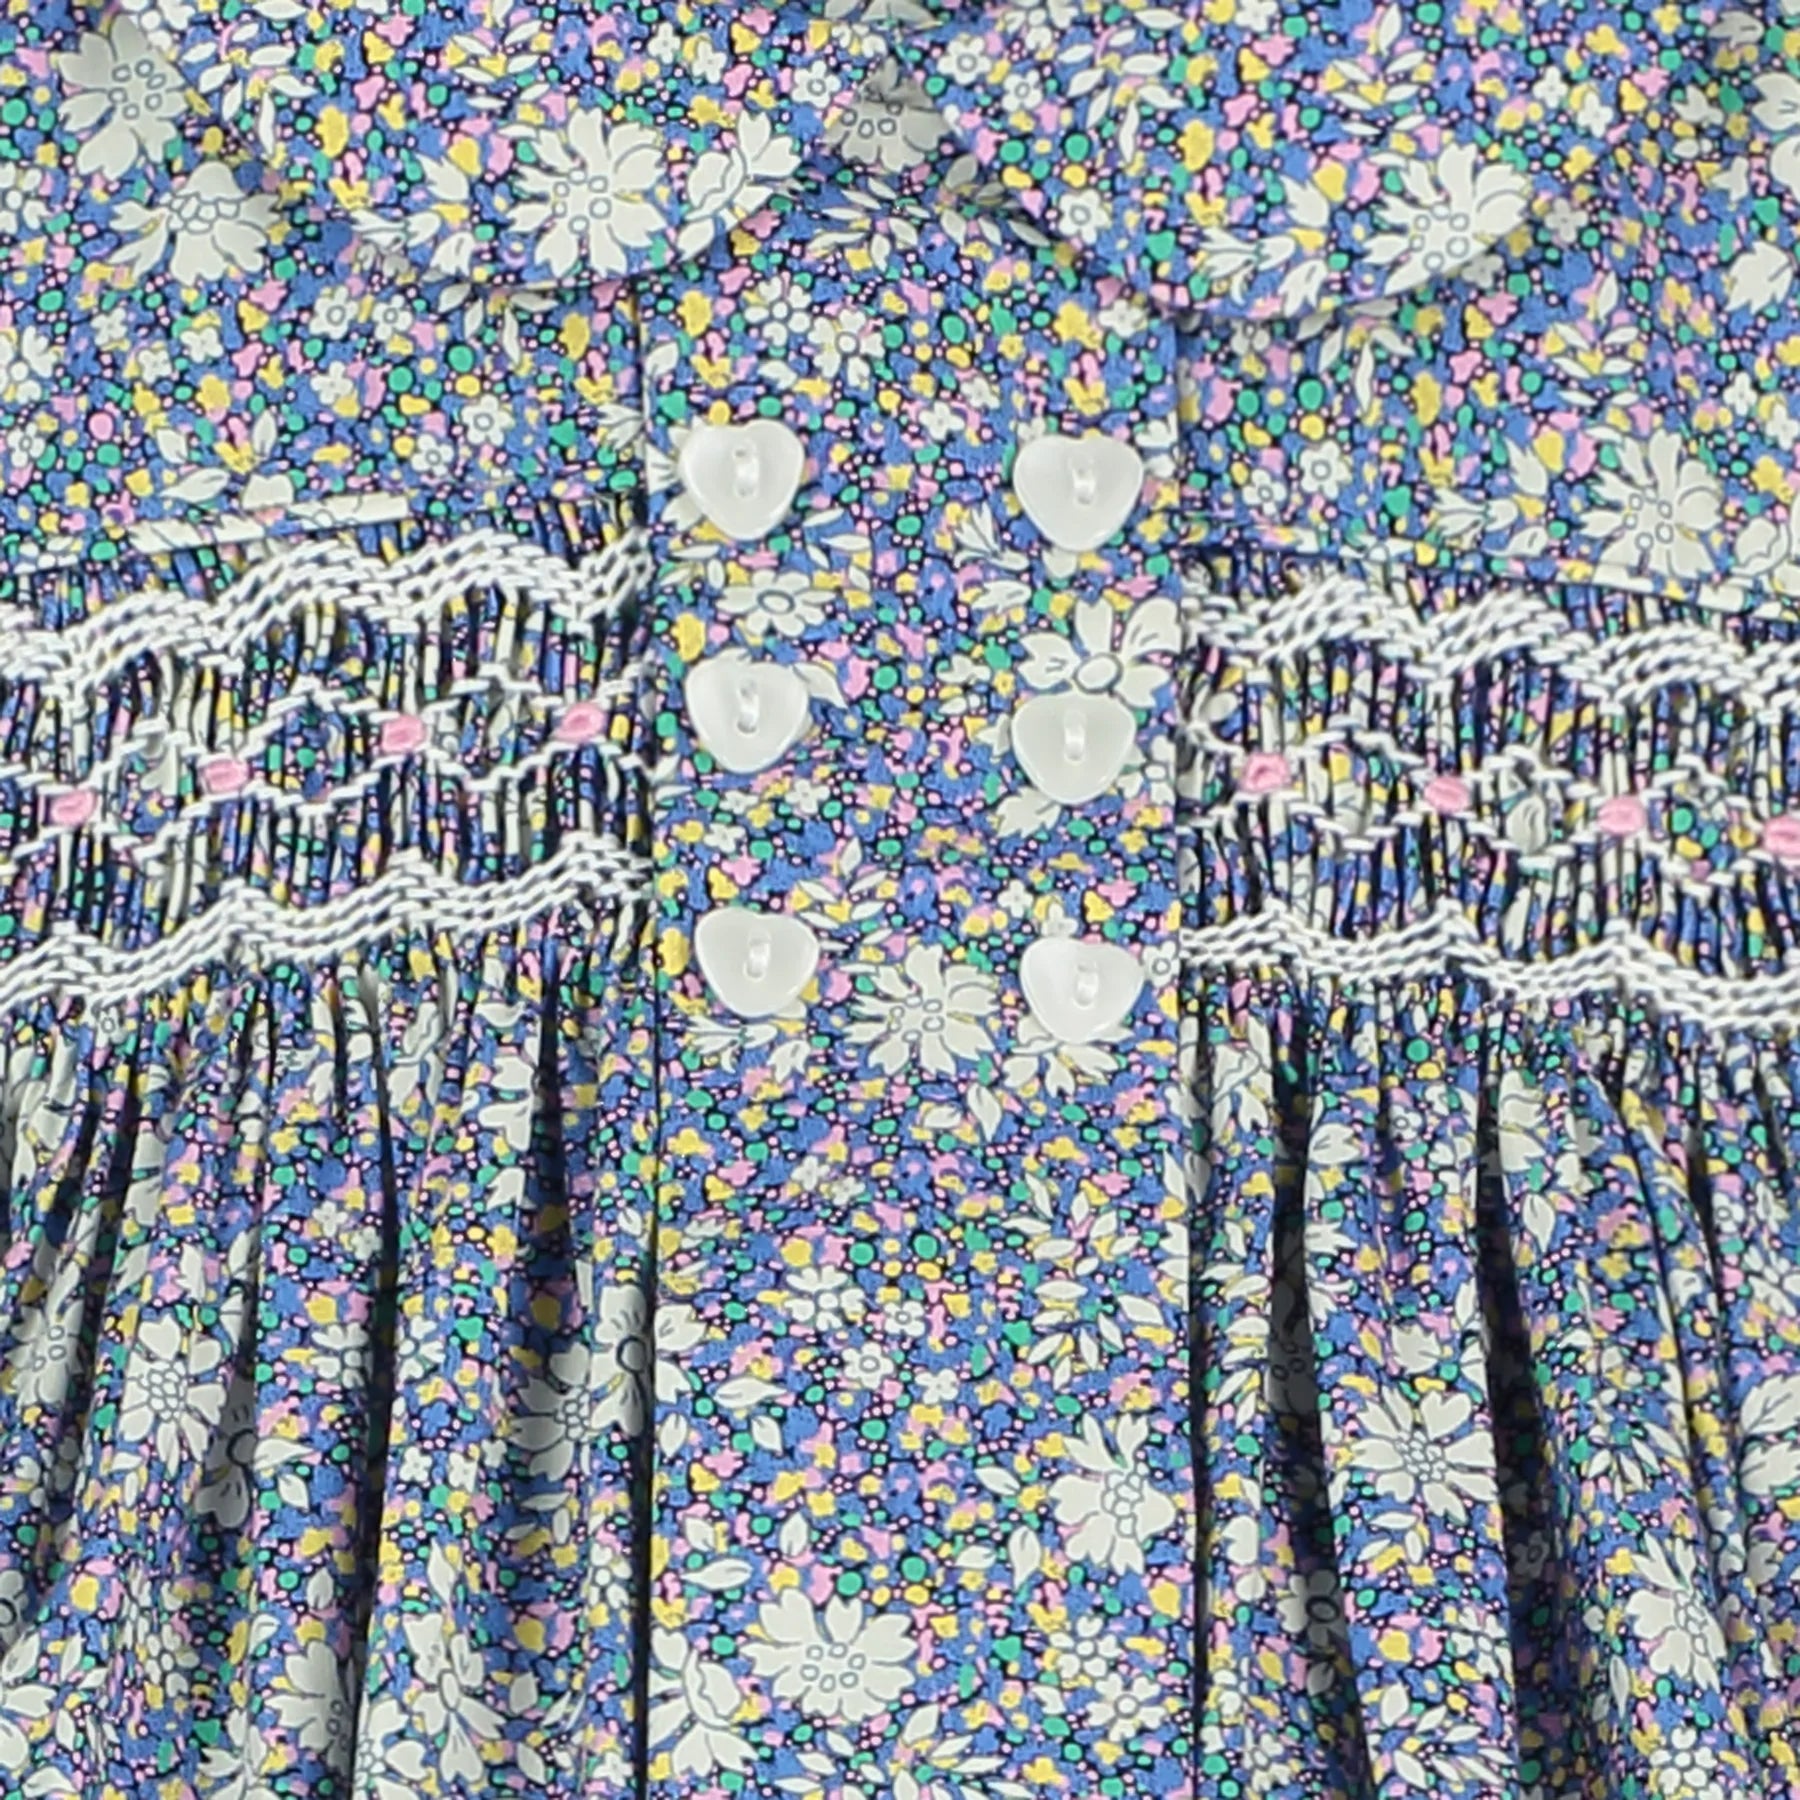 Pastels Liberty Print Smocked Dress w/ Mini Flowers – Mudpie San Francisco